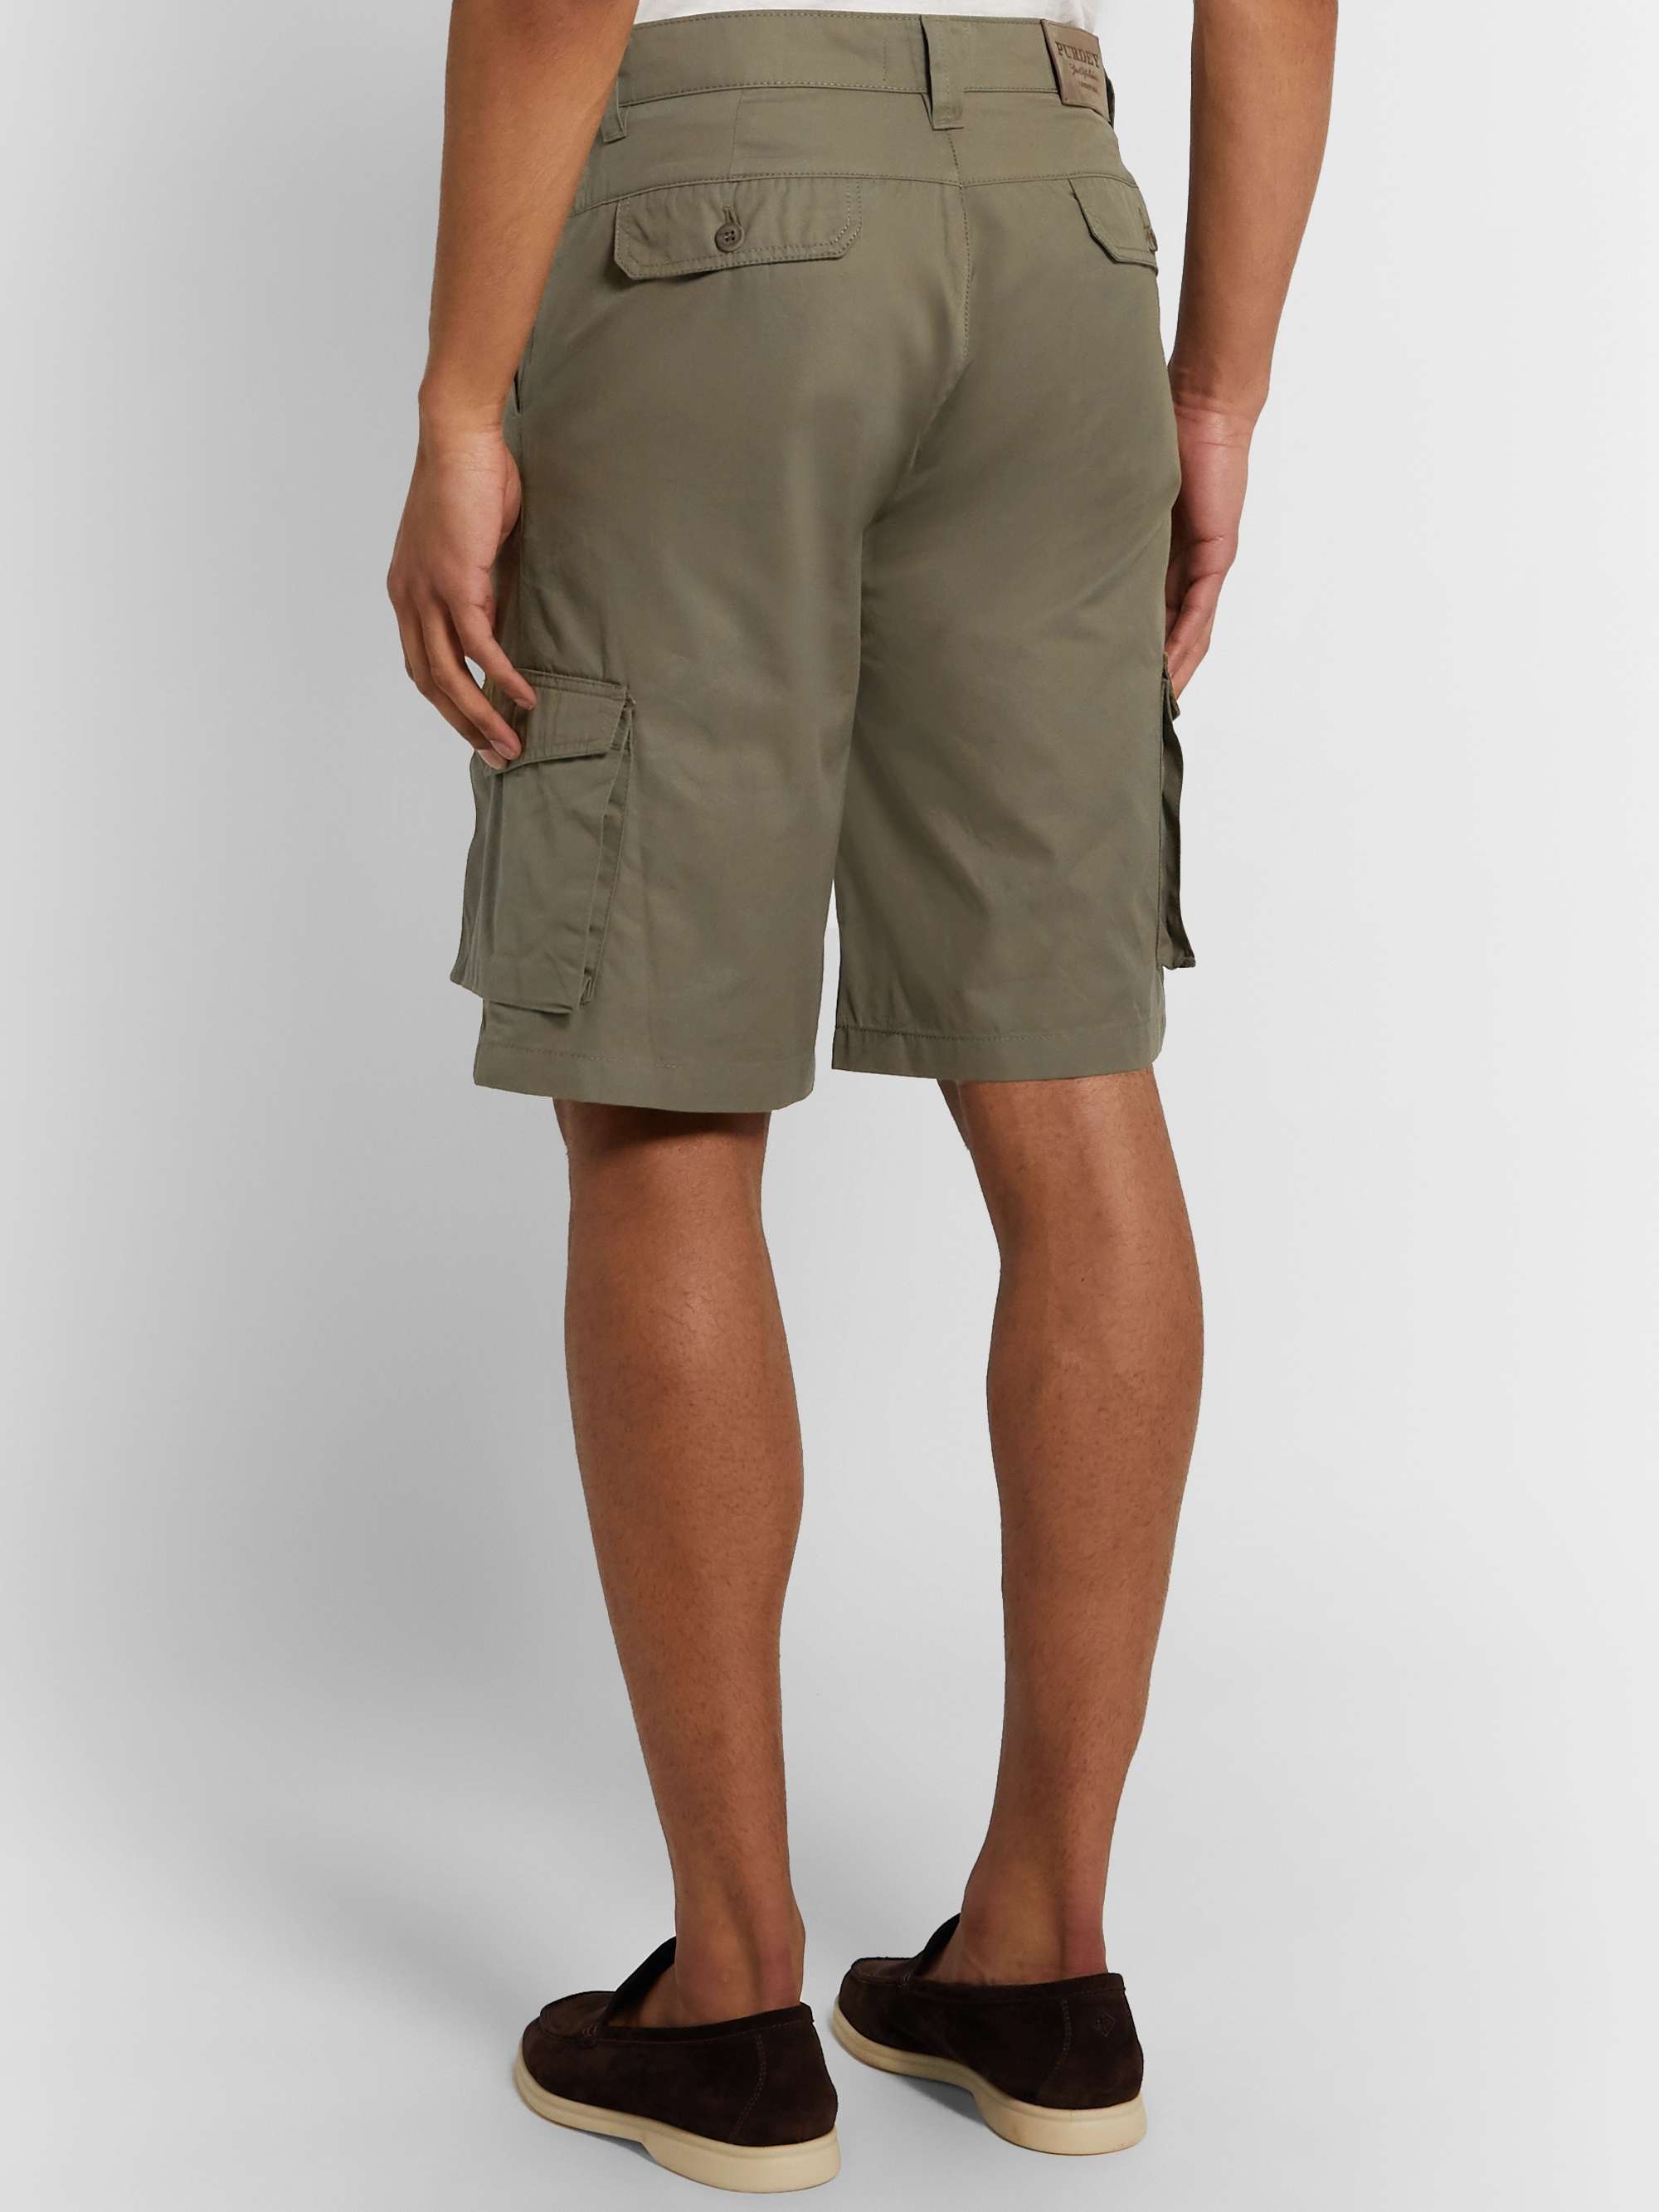 PURDEY Cotton-Ventile Cargo Shorts for Men | MR PORTER